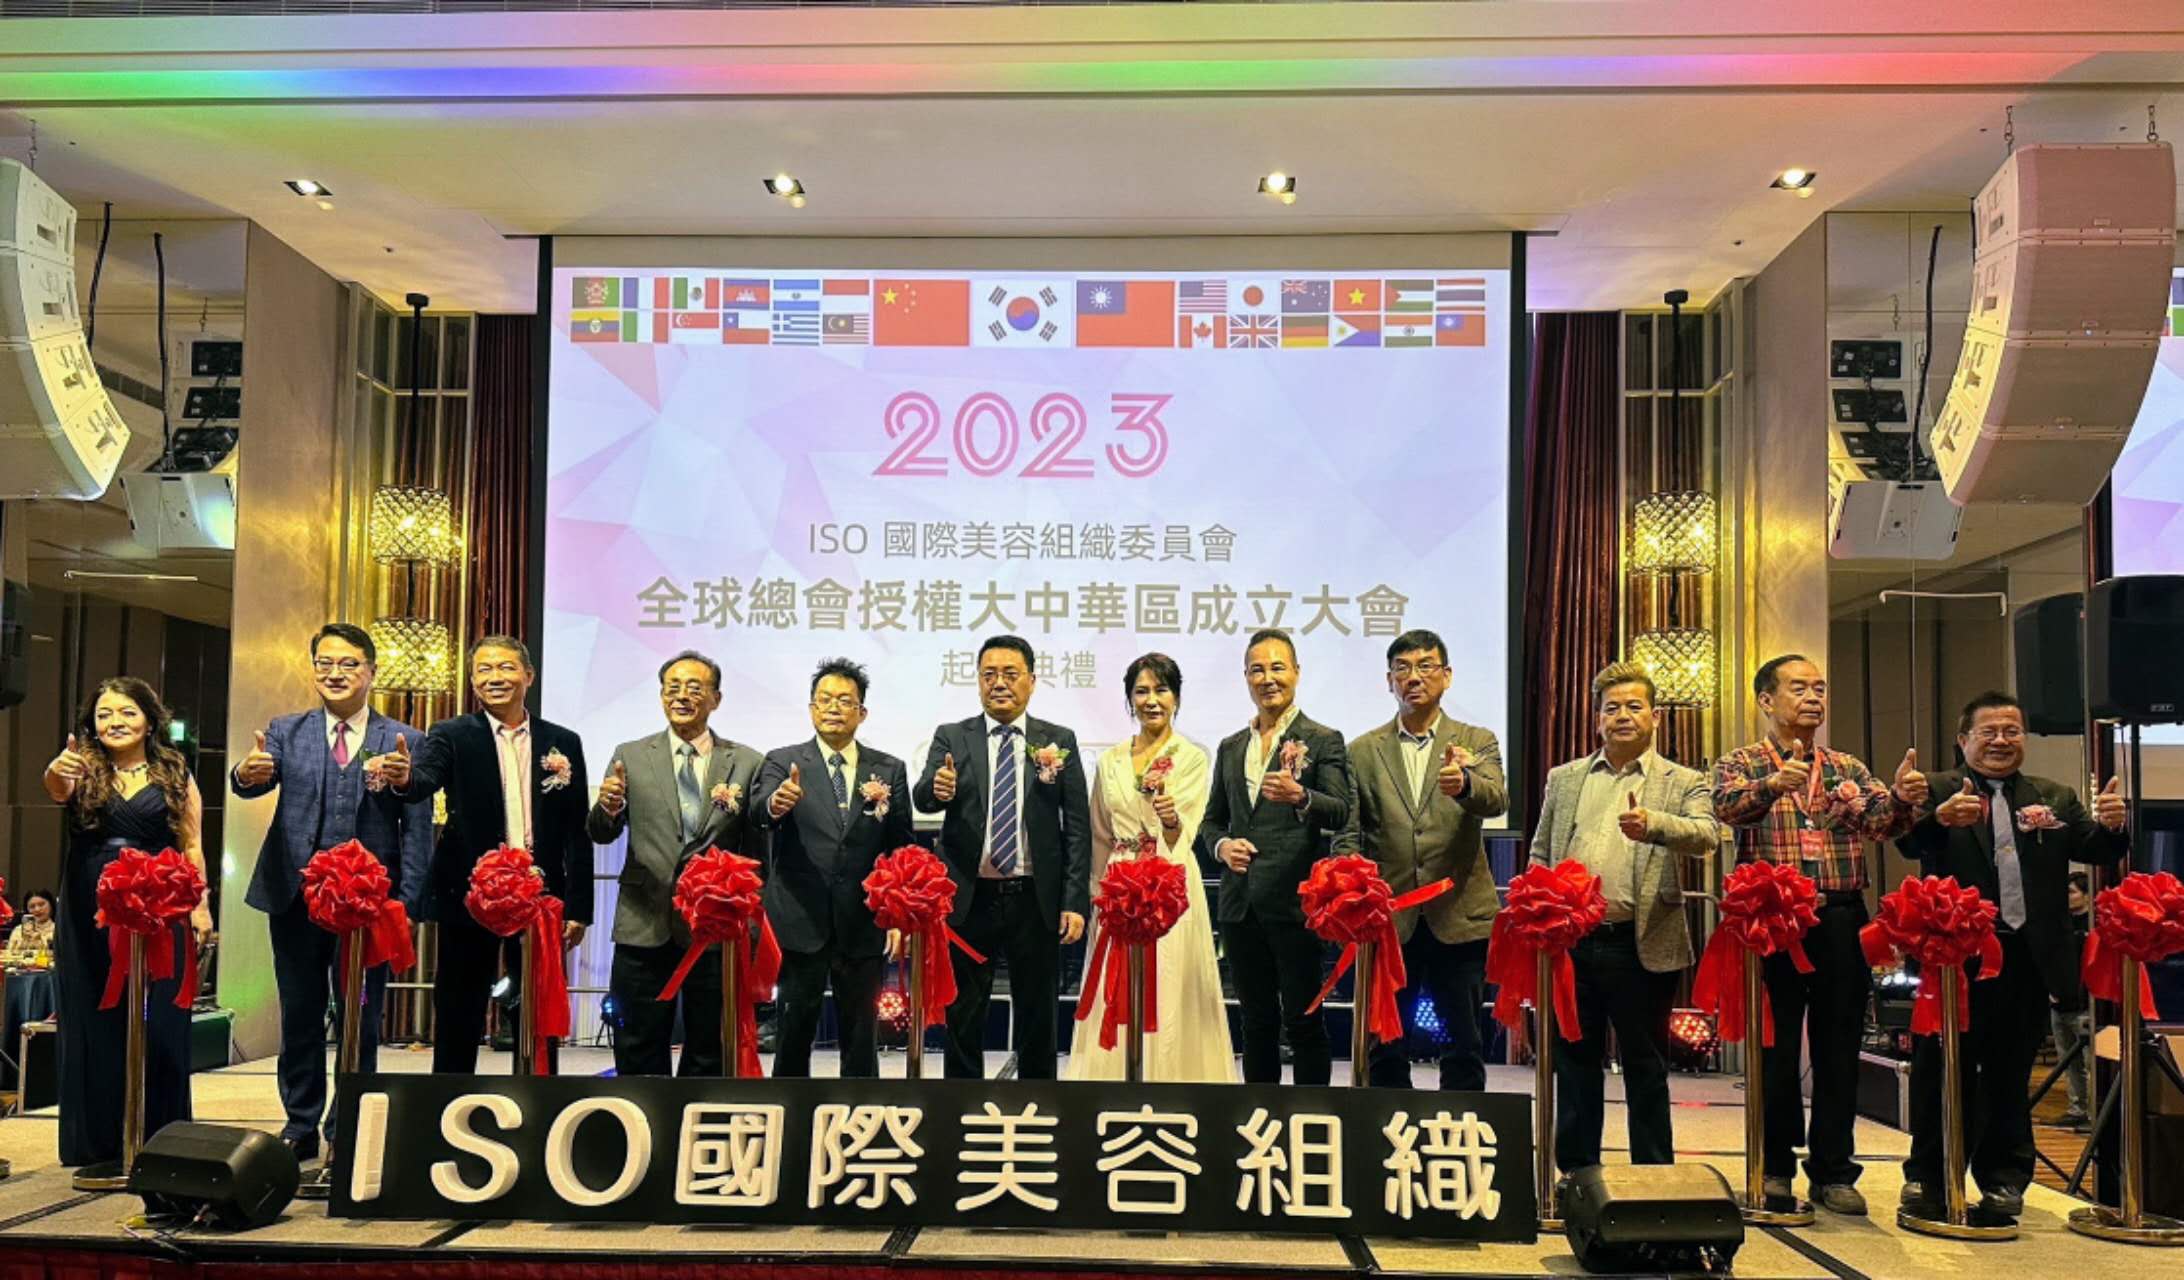 ISO國際美容全球總會授權大中華區成立啟航典禮　全球總會李漢洙率團見證台灣美業新里程